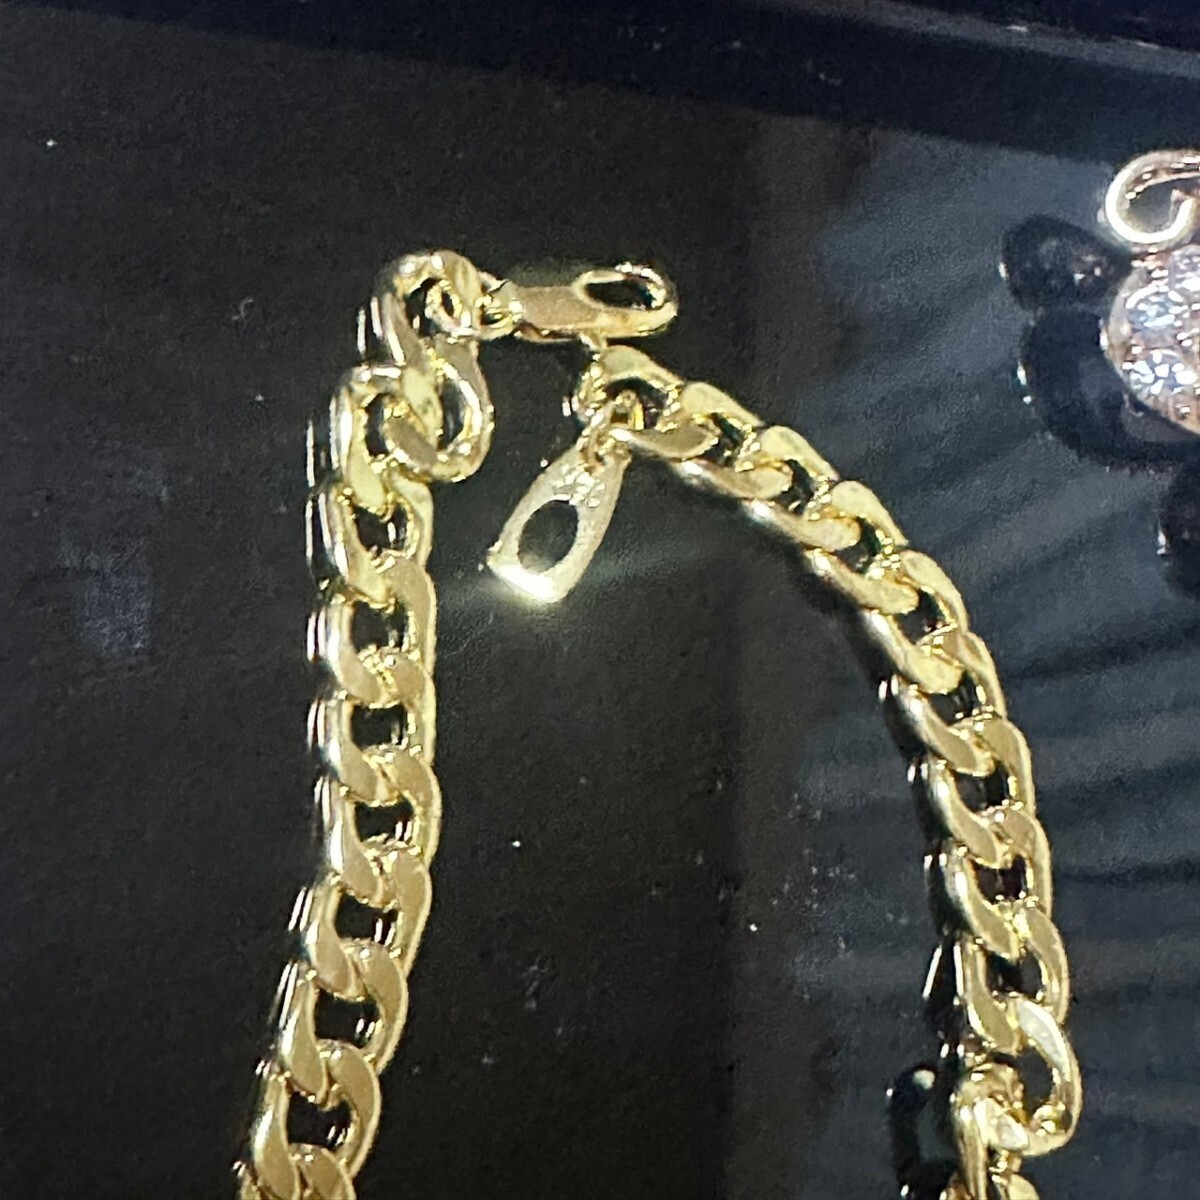 . goods adjustment necklace ring accessory set sale ring chain necklace adjustment goods summarize lady's Vintage 